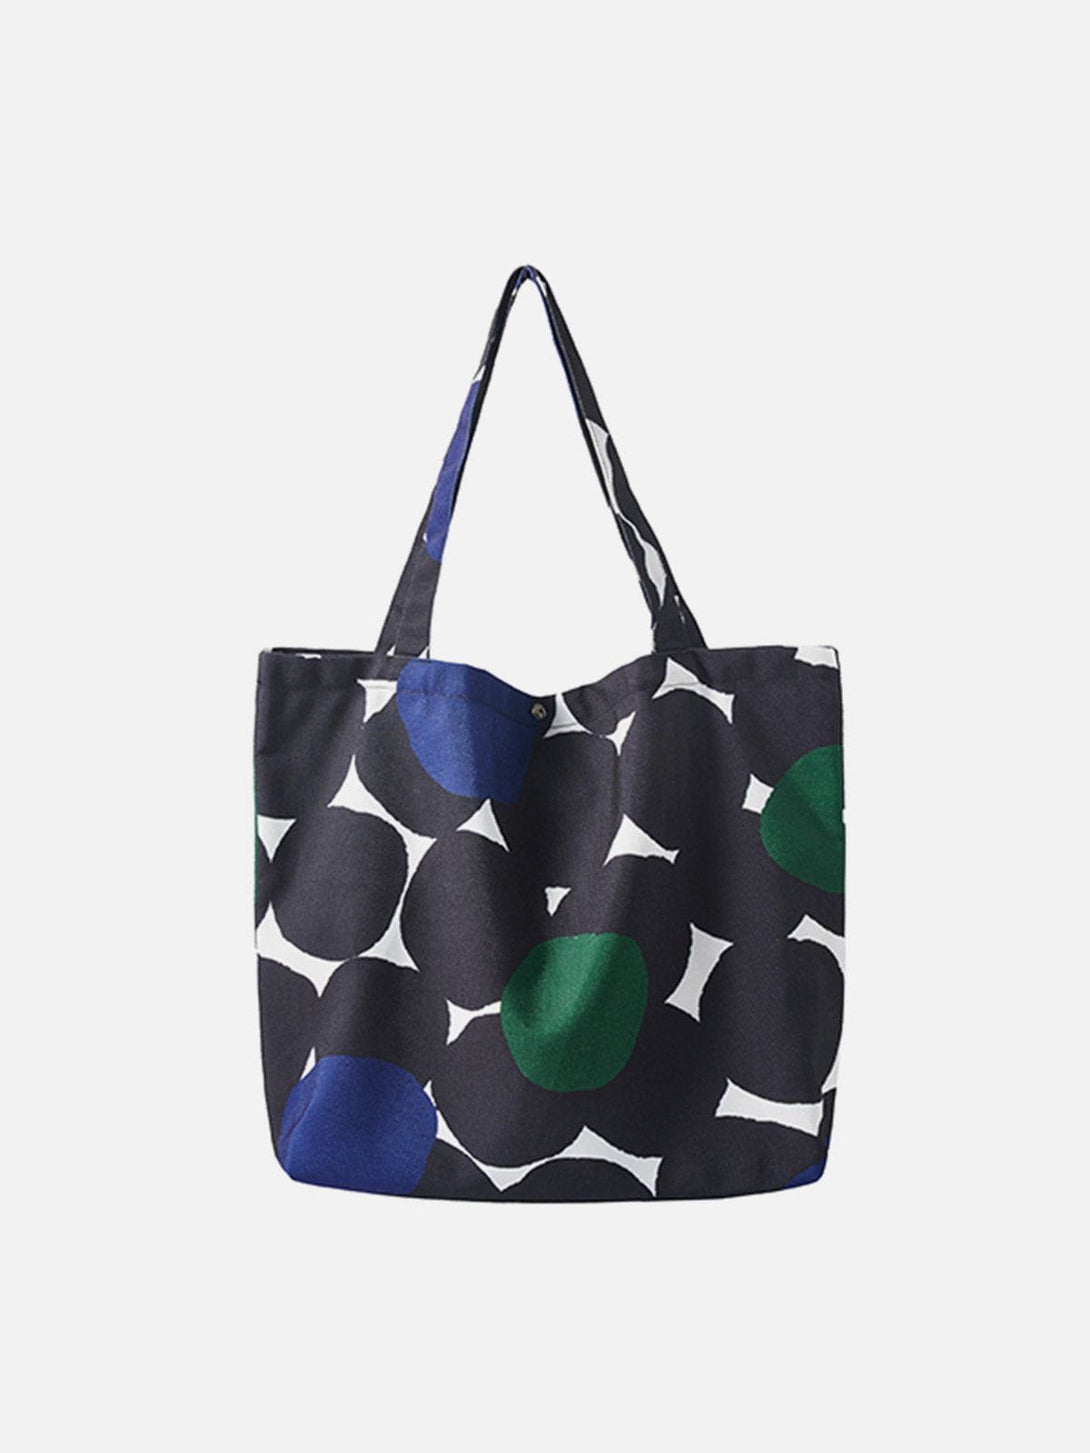 Levefly - Graffiti Canvas Shoulder Bag Bag - Streetwear Fashion - levefly.com